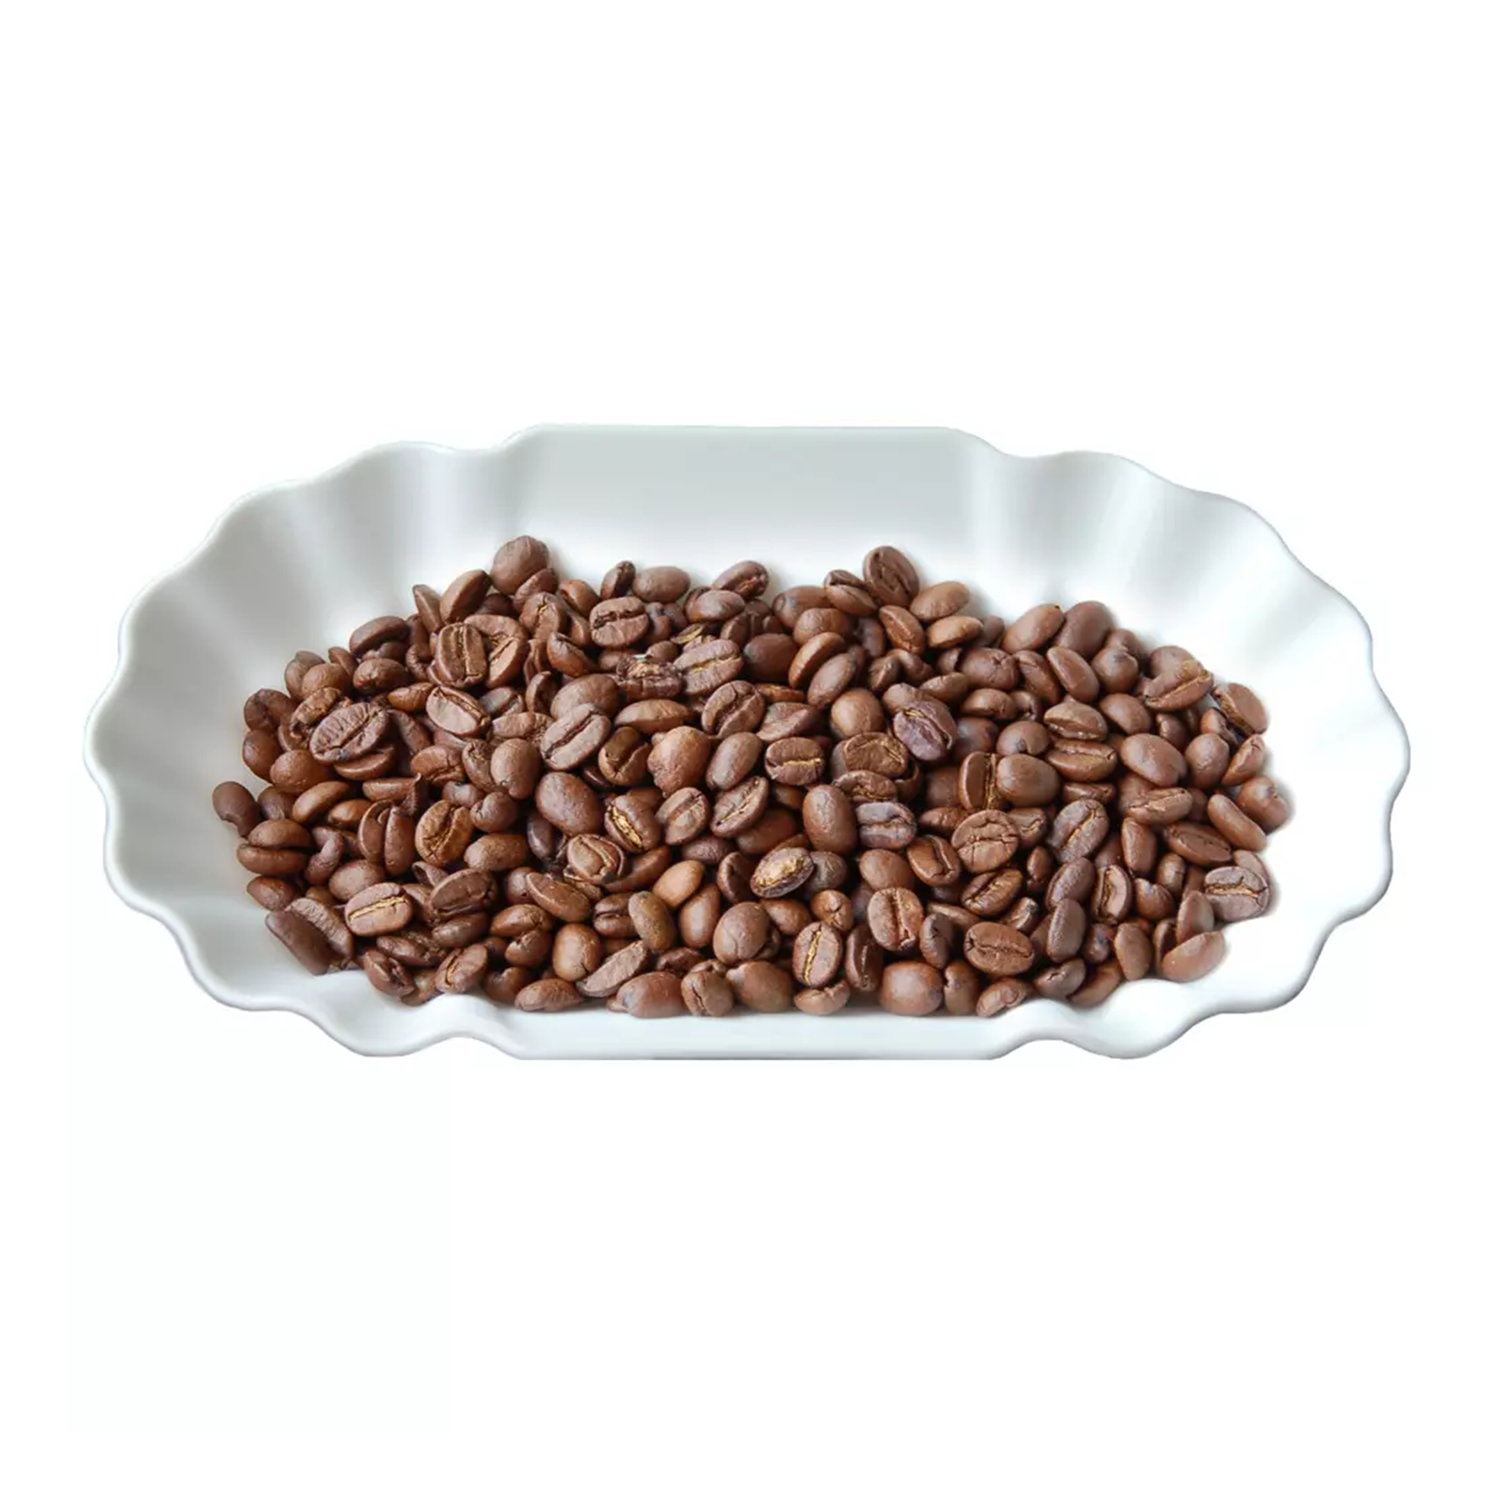 Joefrex Coffee Bean Tray